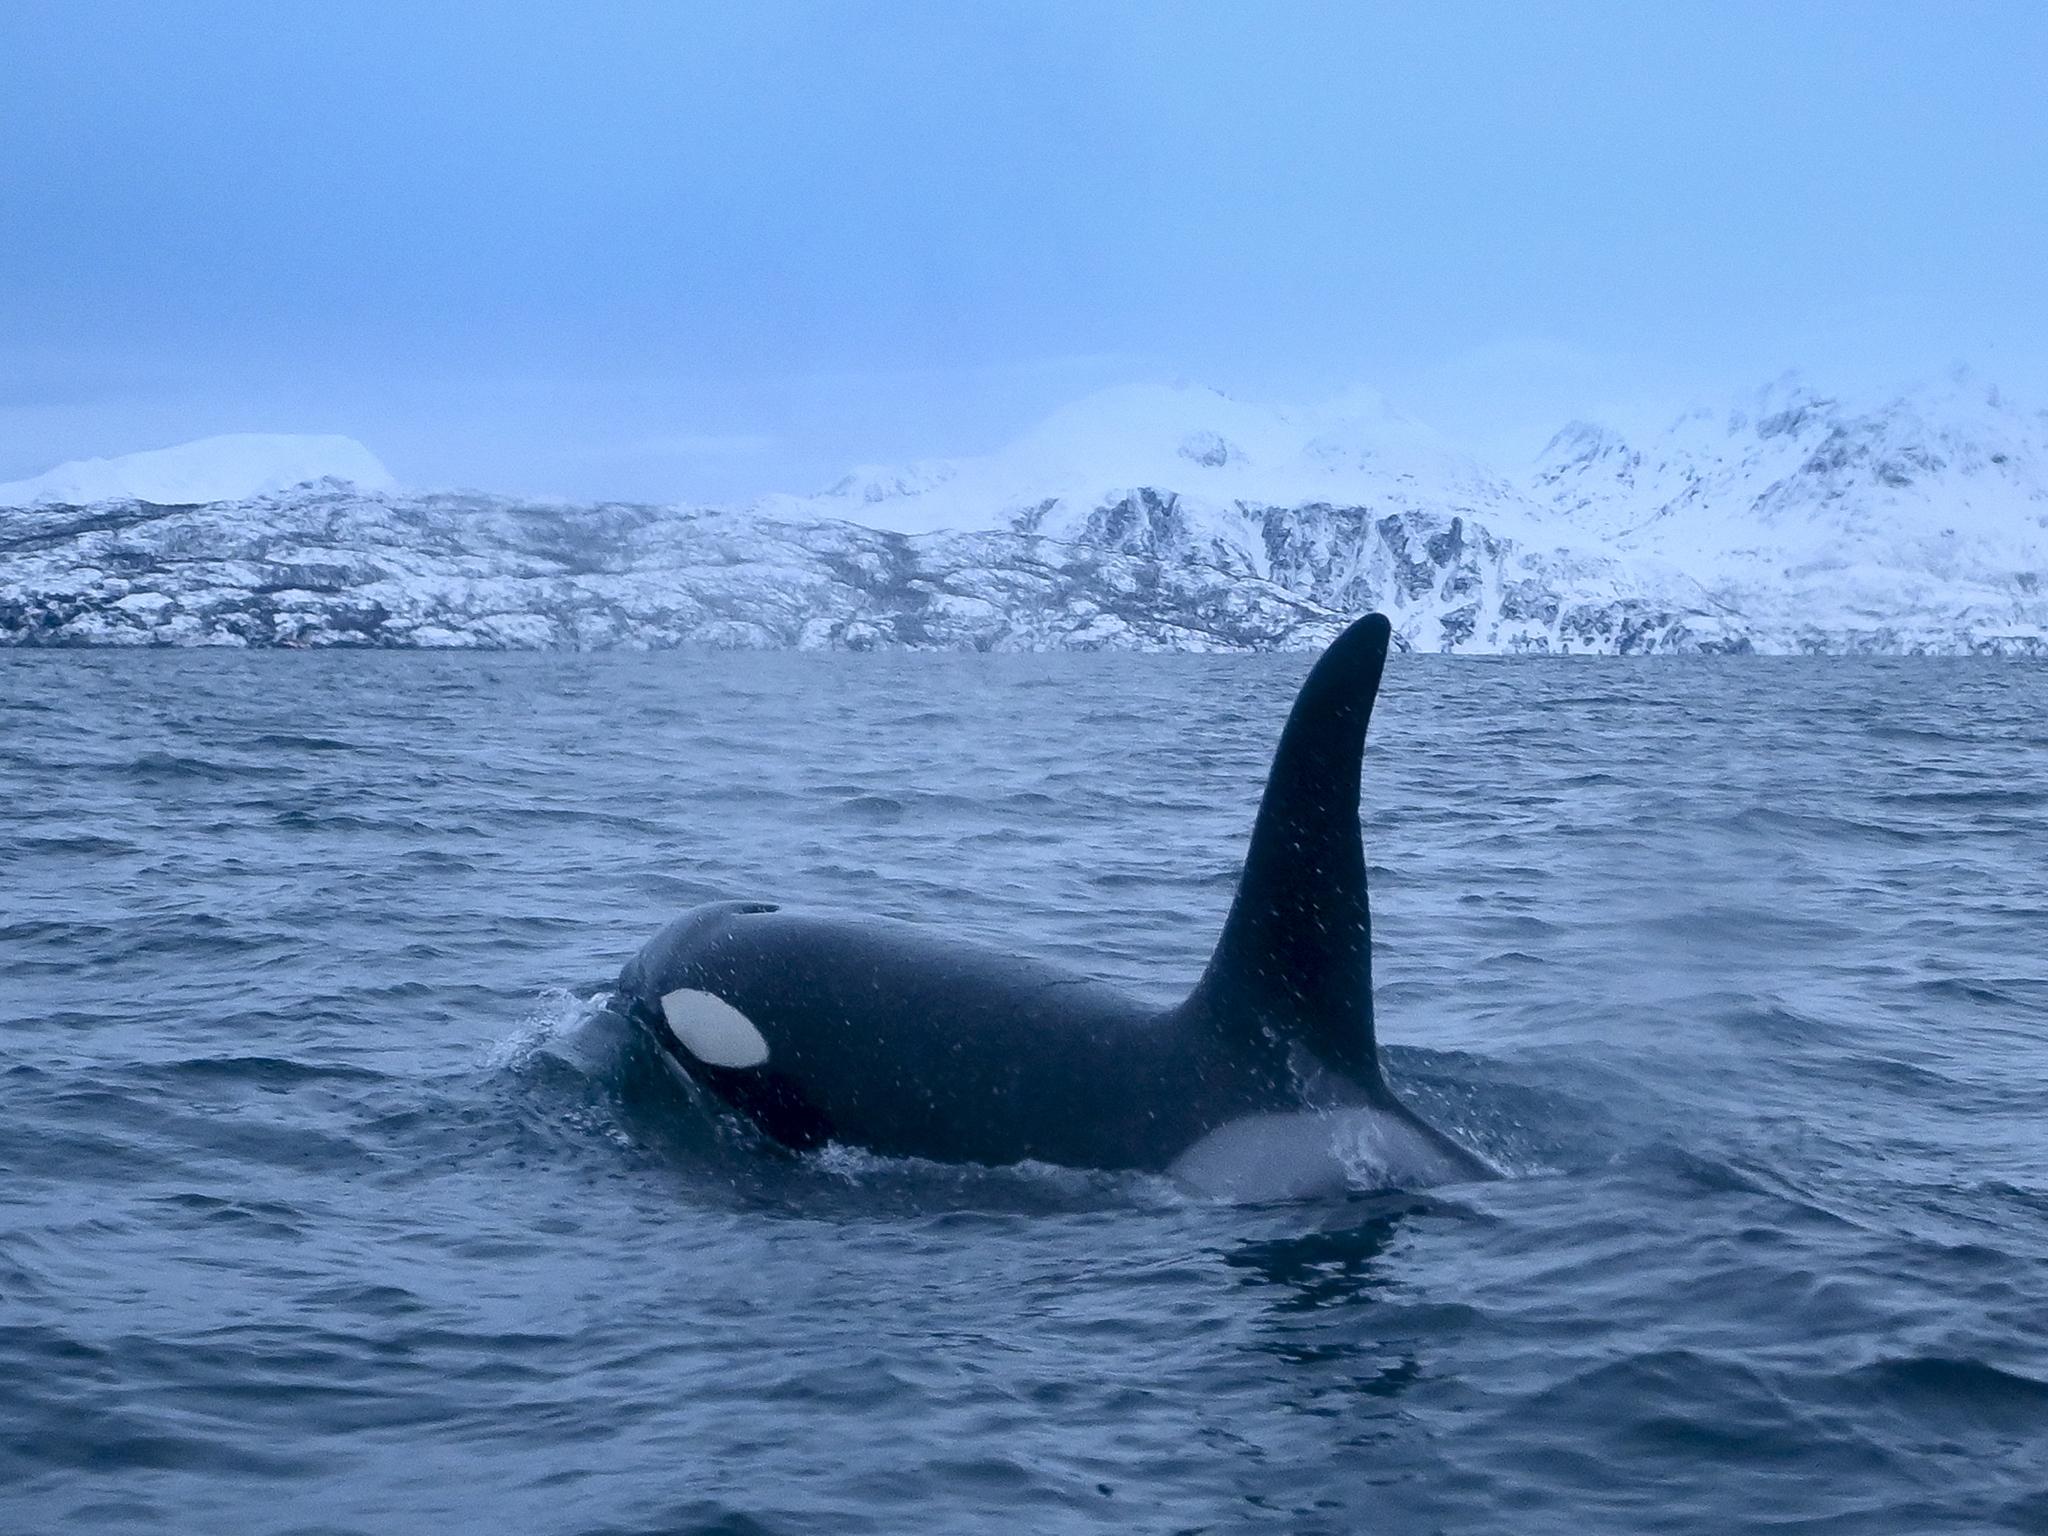 An orca chases herrings in the Reisafjorden fjord region in Norway